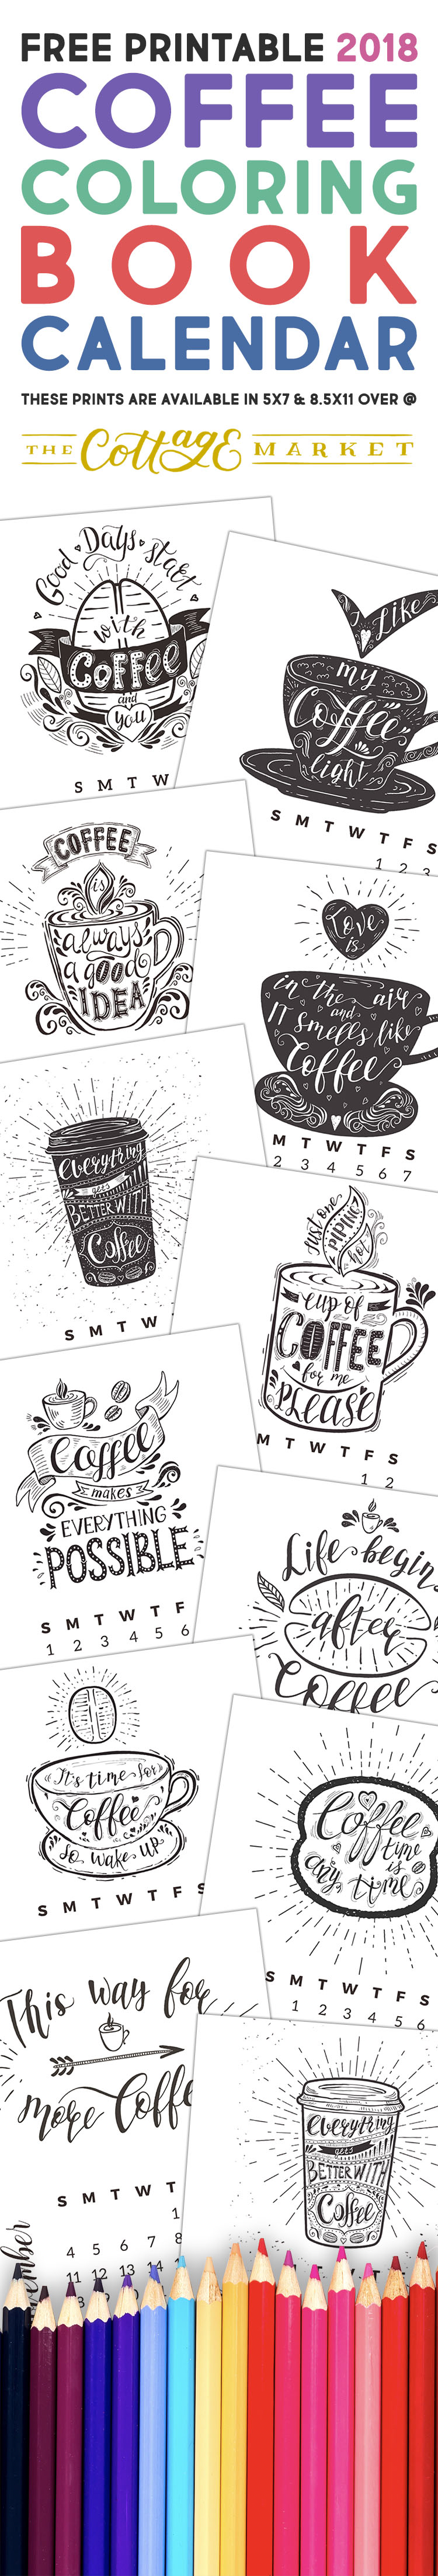 http://thecottagemarket.com/wp-content/uploads/2017/12/TCM-Coffee-ColoringBook-Calendar-T-1.jpg